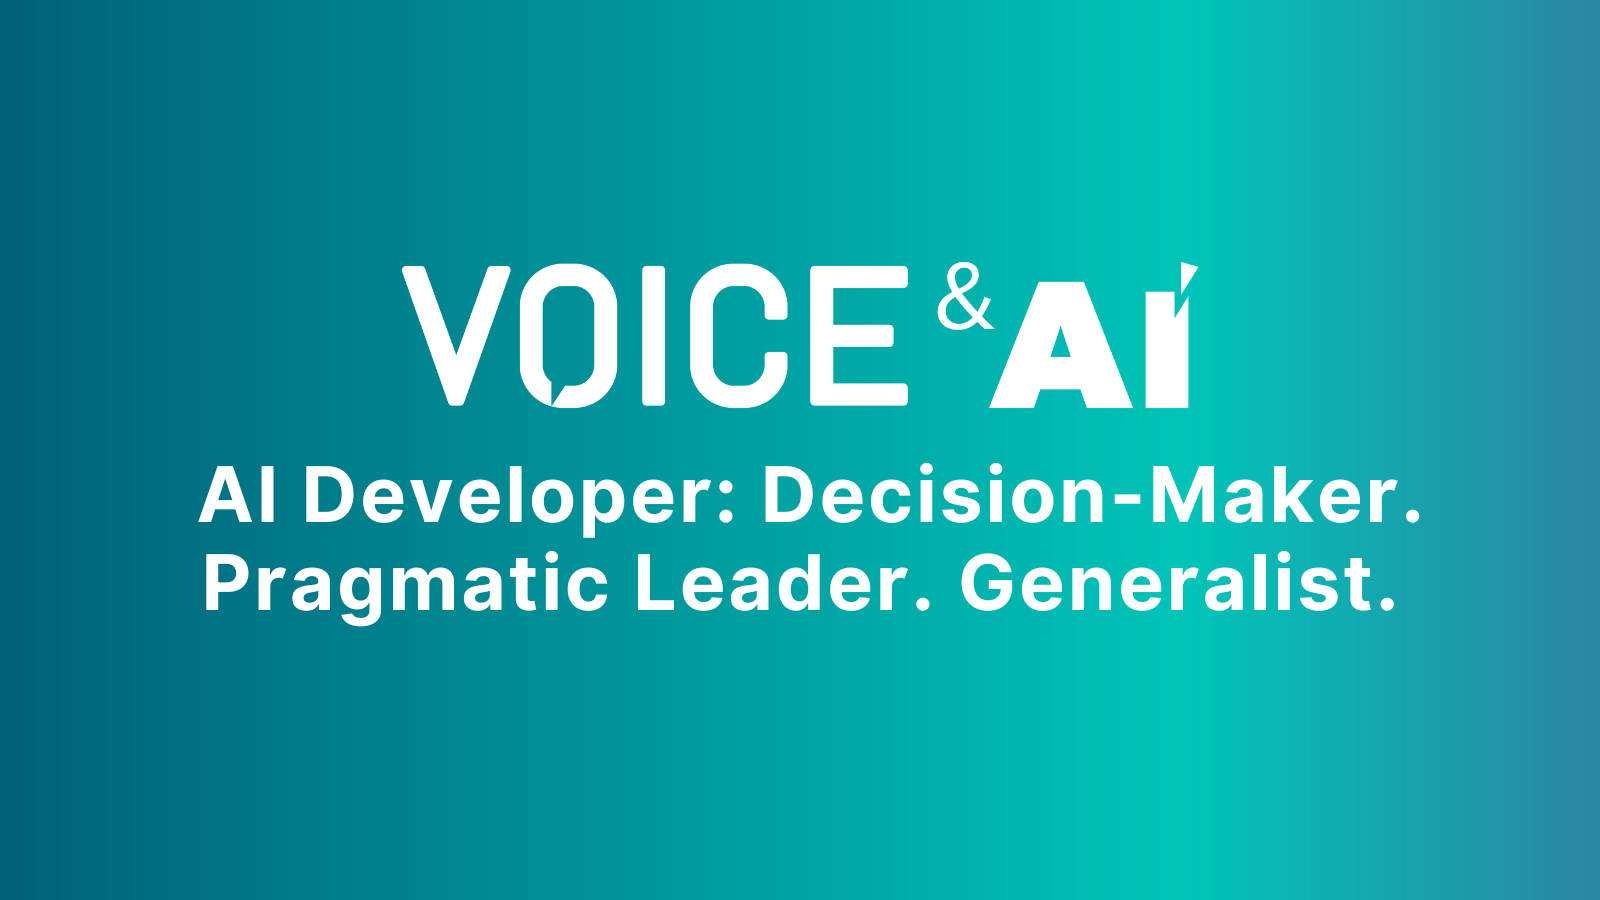 AI Developer: Decision-Maker. Pragmatic Leader. Generalist.